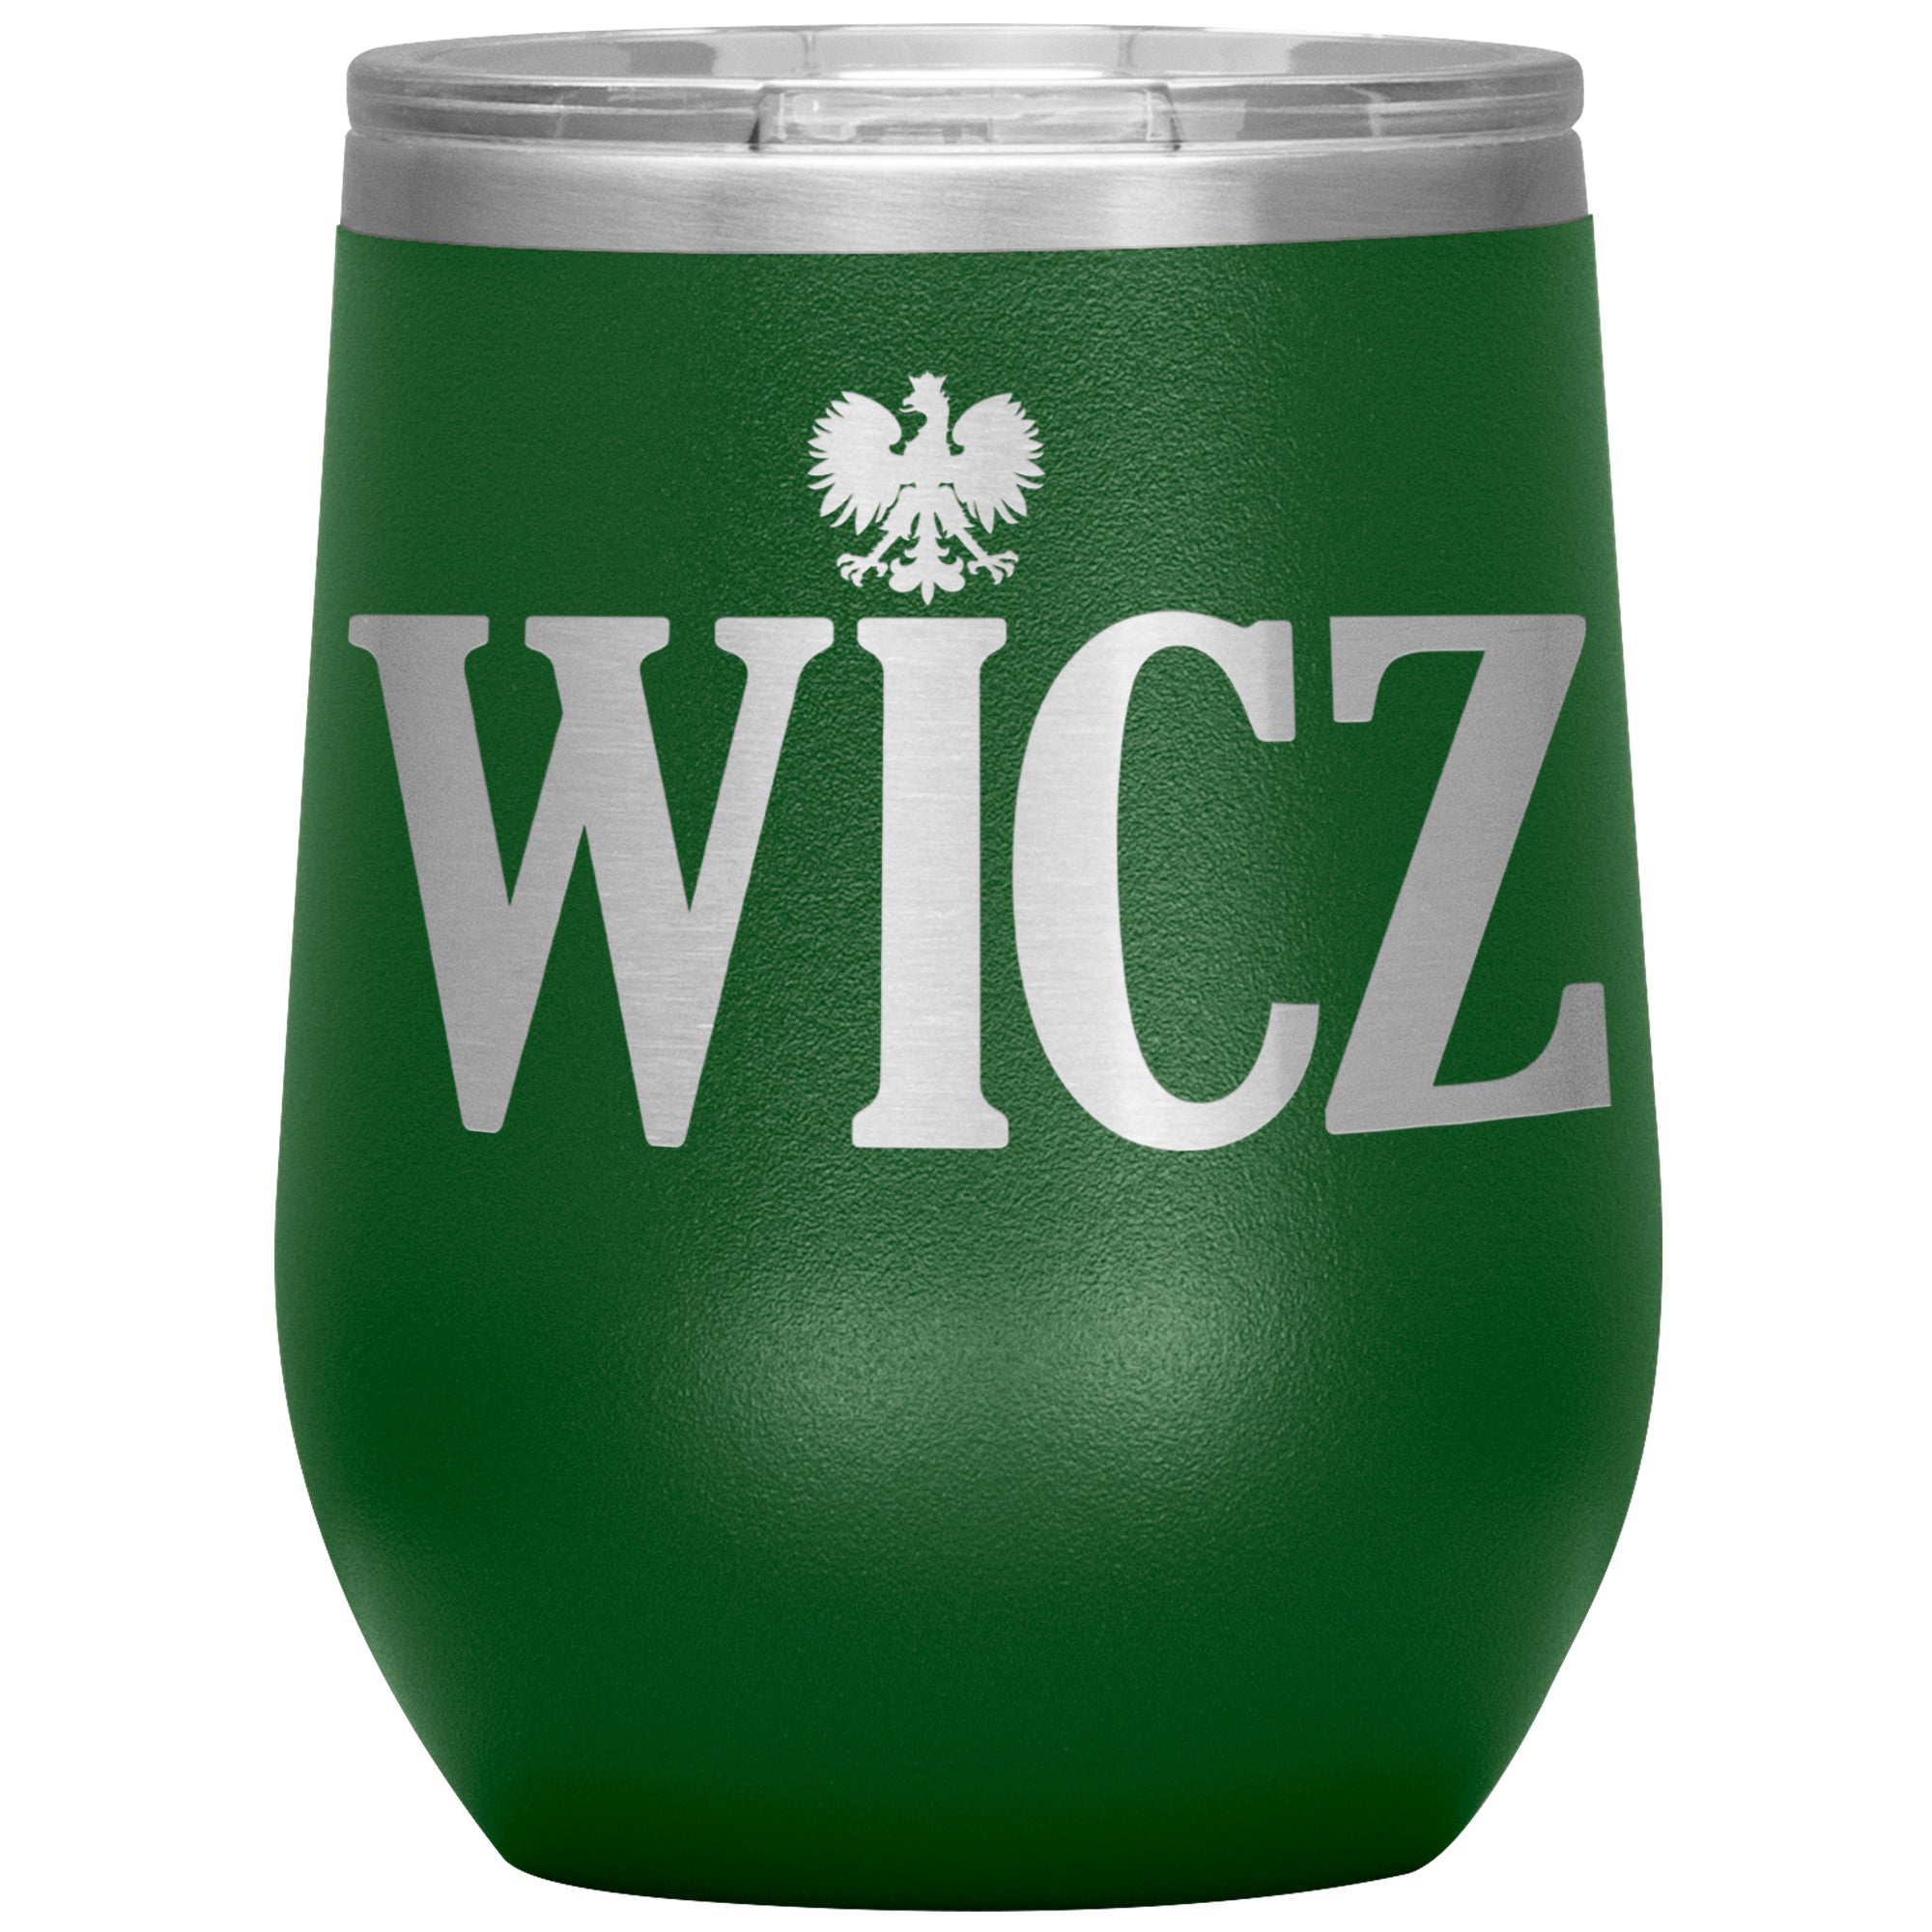 Polish Surname Ending in WICZ Insulated Wine Tumbler Tumblers teelaunch Green  